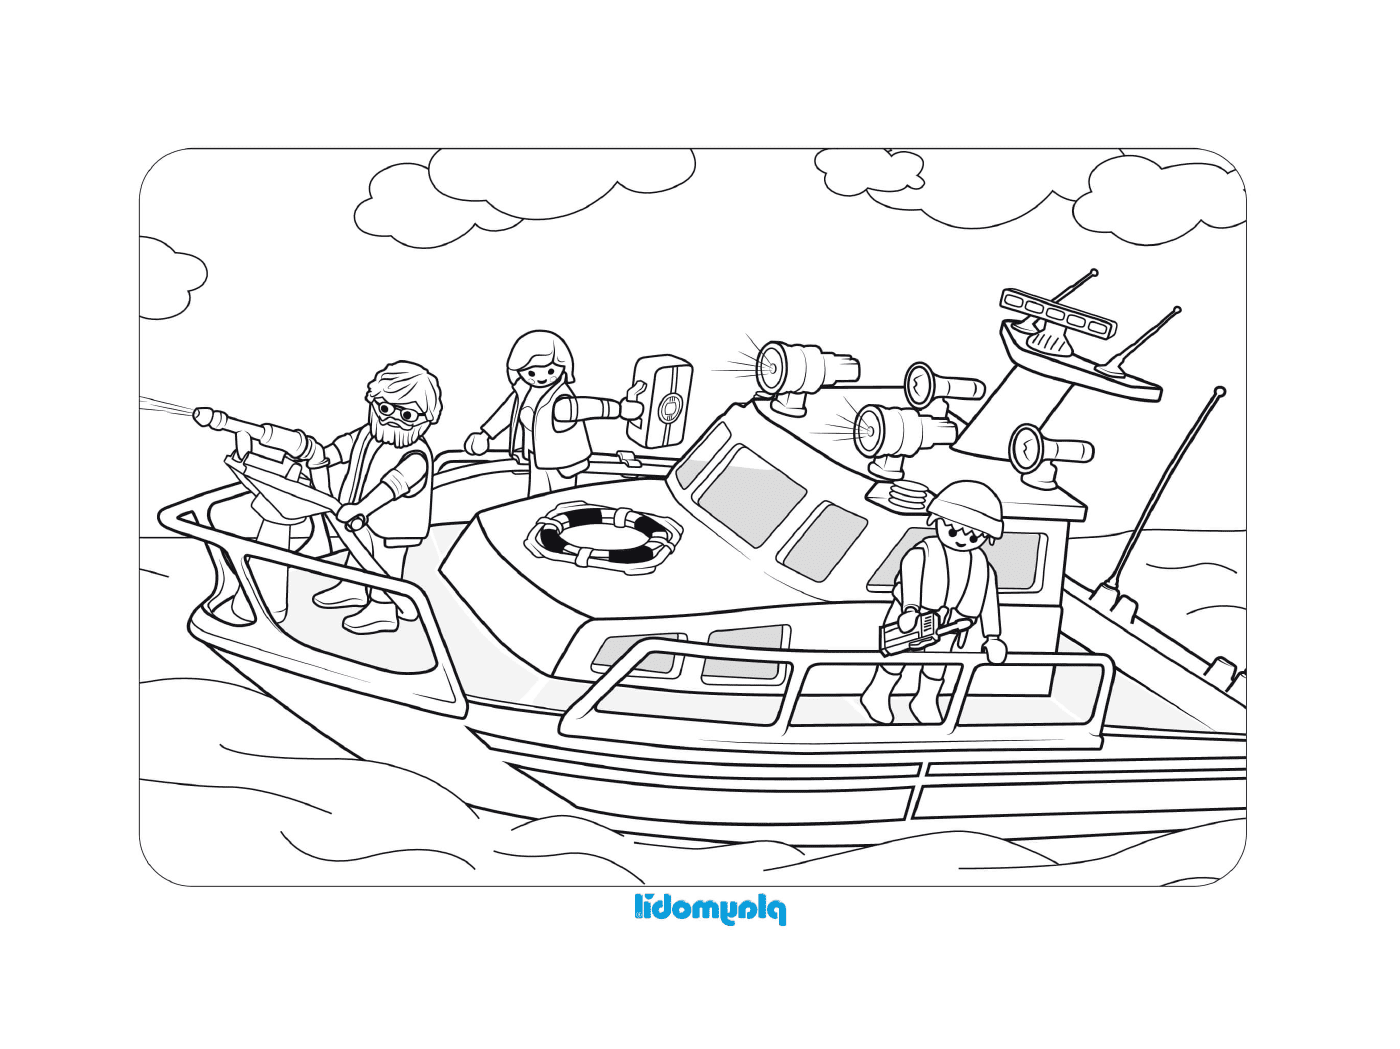  Boot mit Personen an Bord 